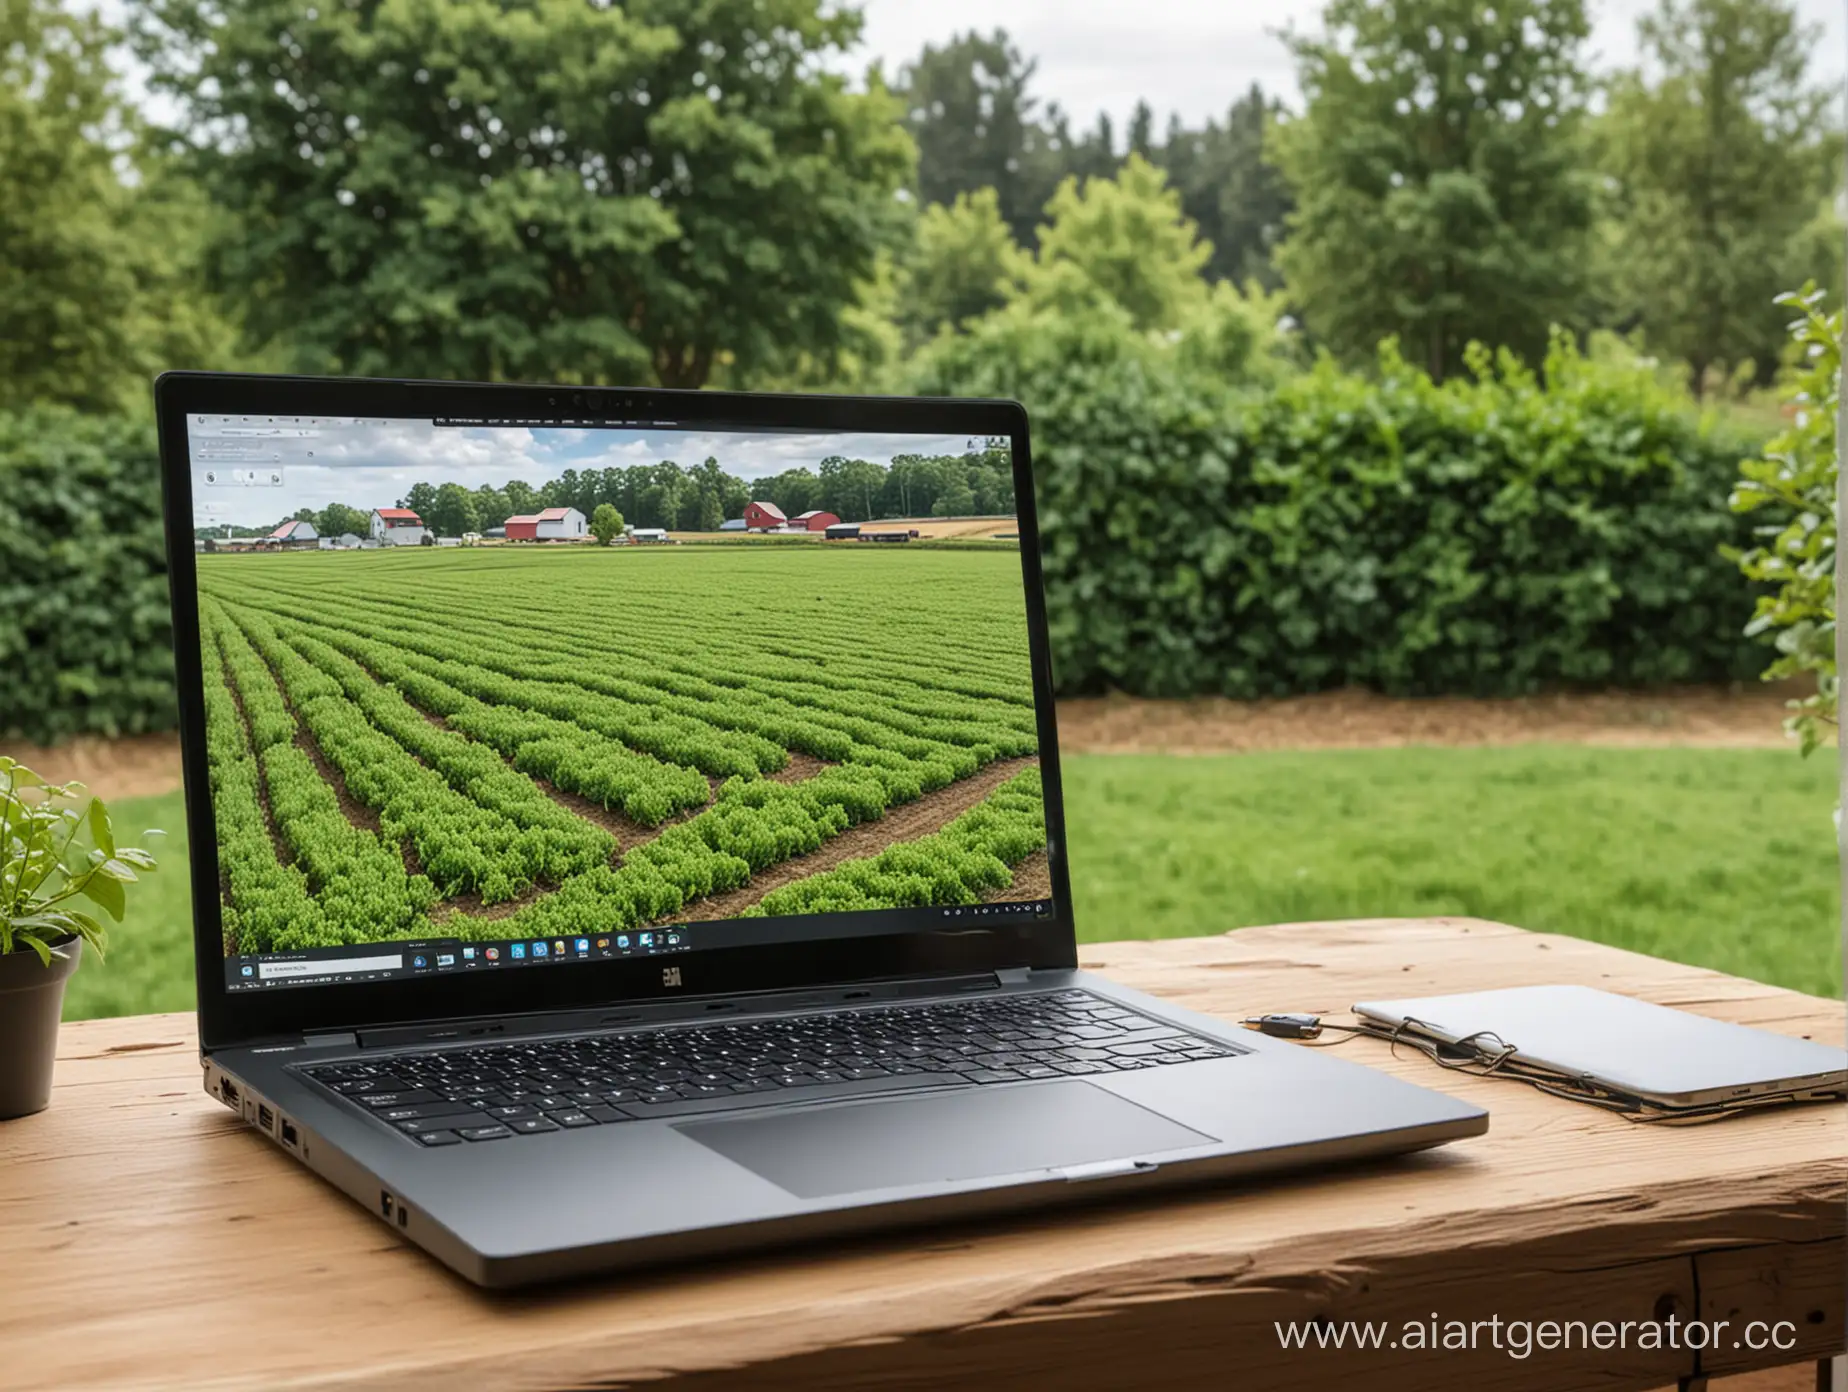 Agricultural-Land-Modeling-Program-on-Laptop-by-GreeneryFilled-Yard